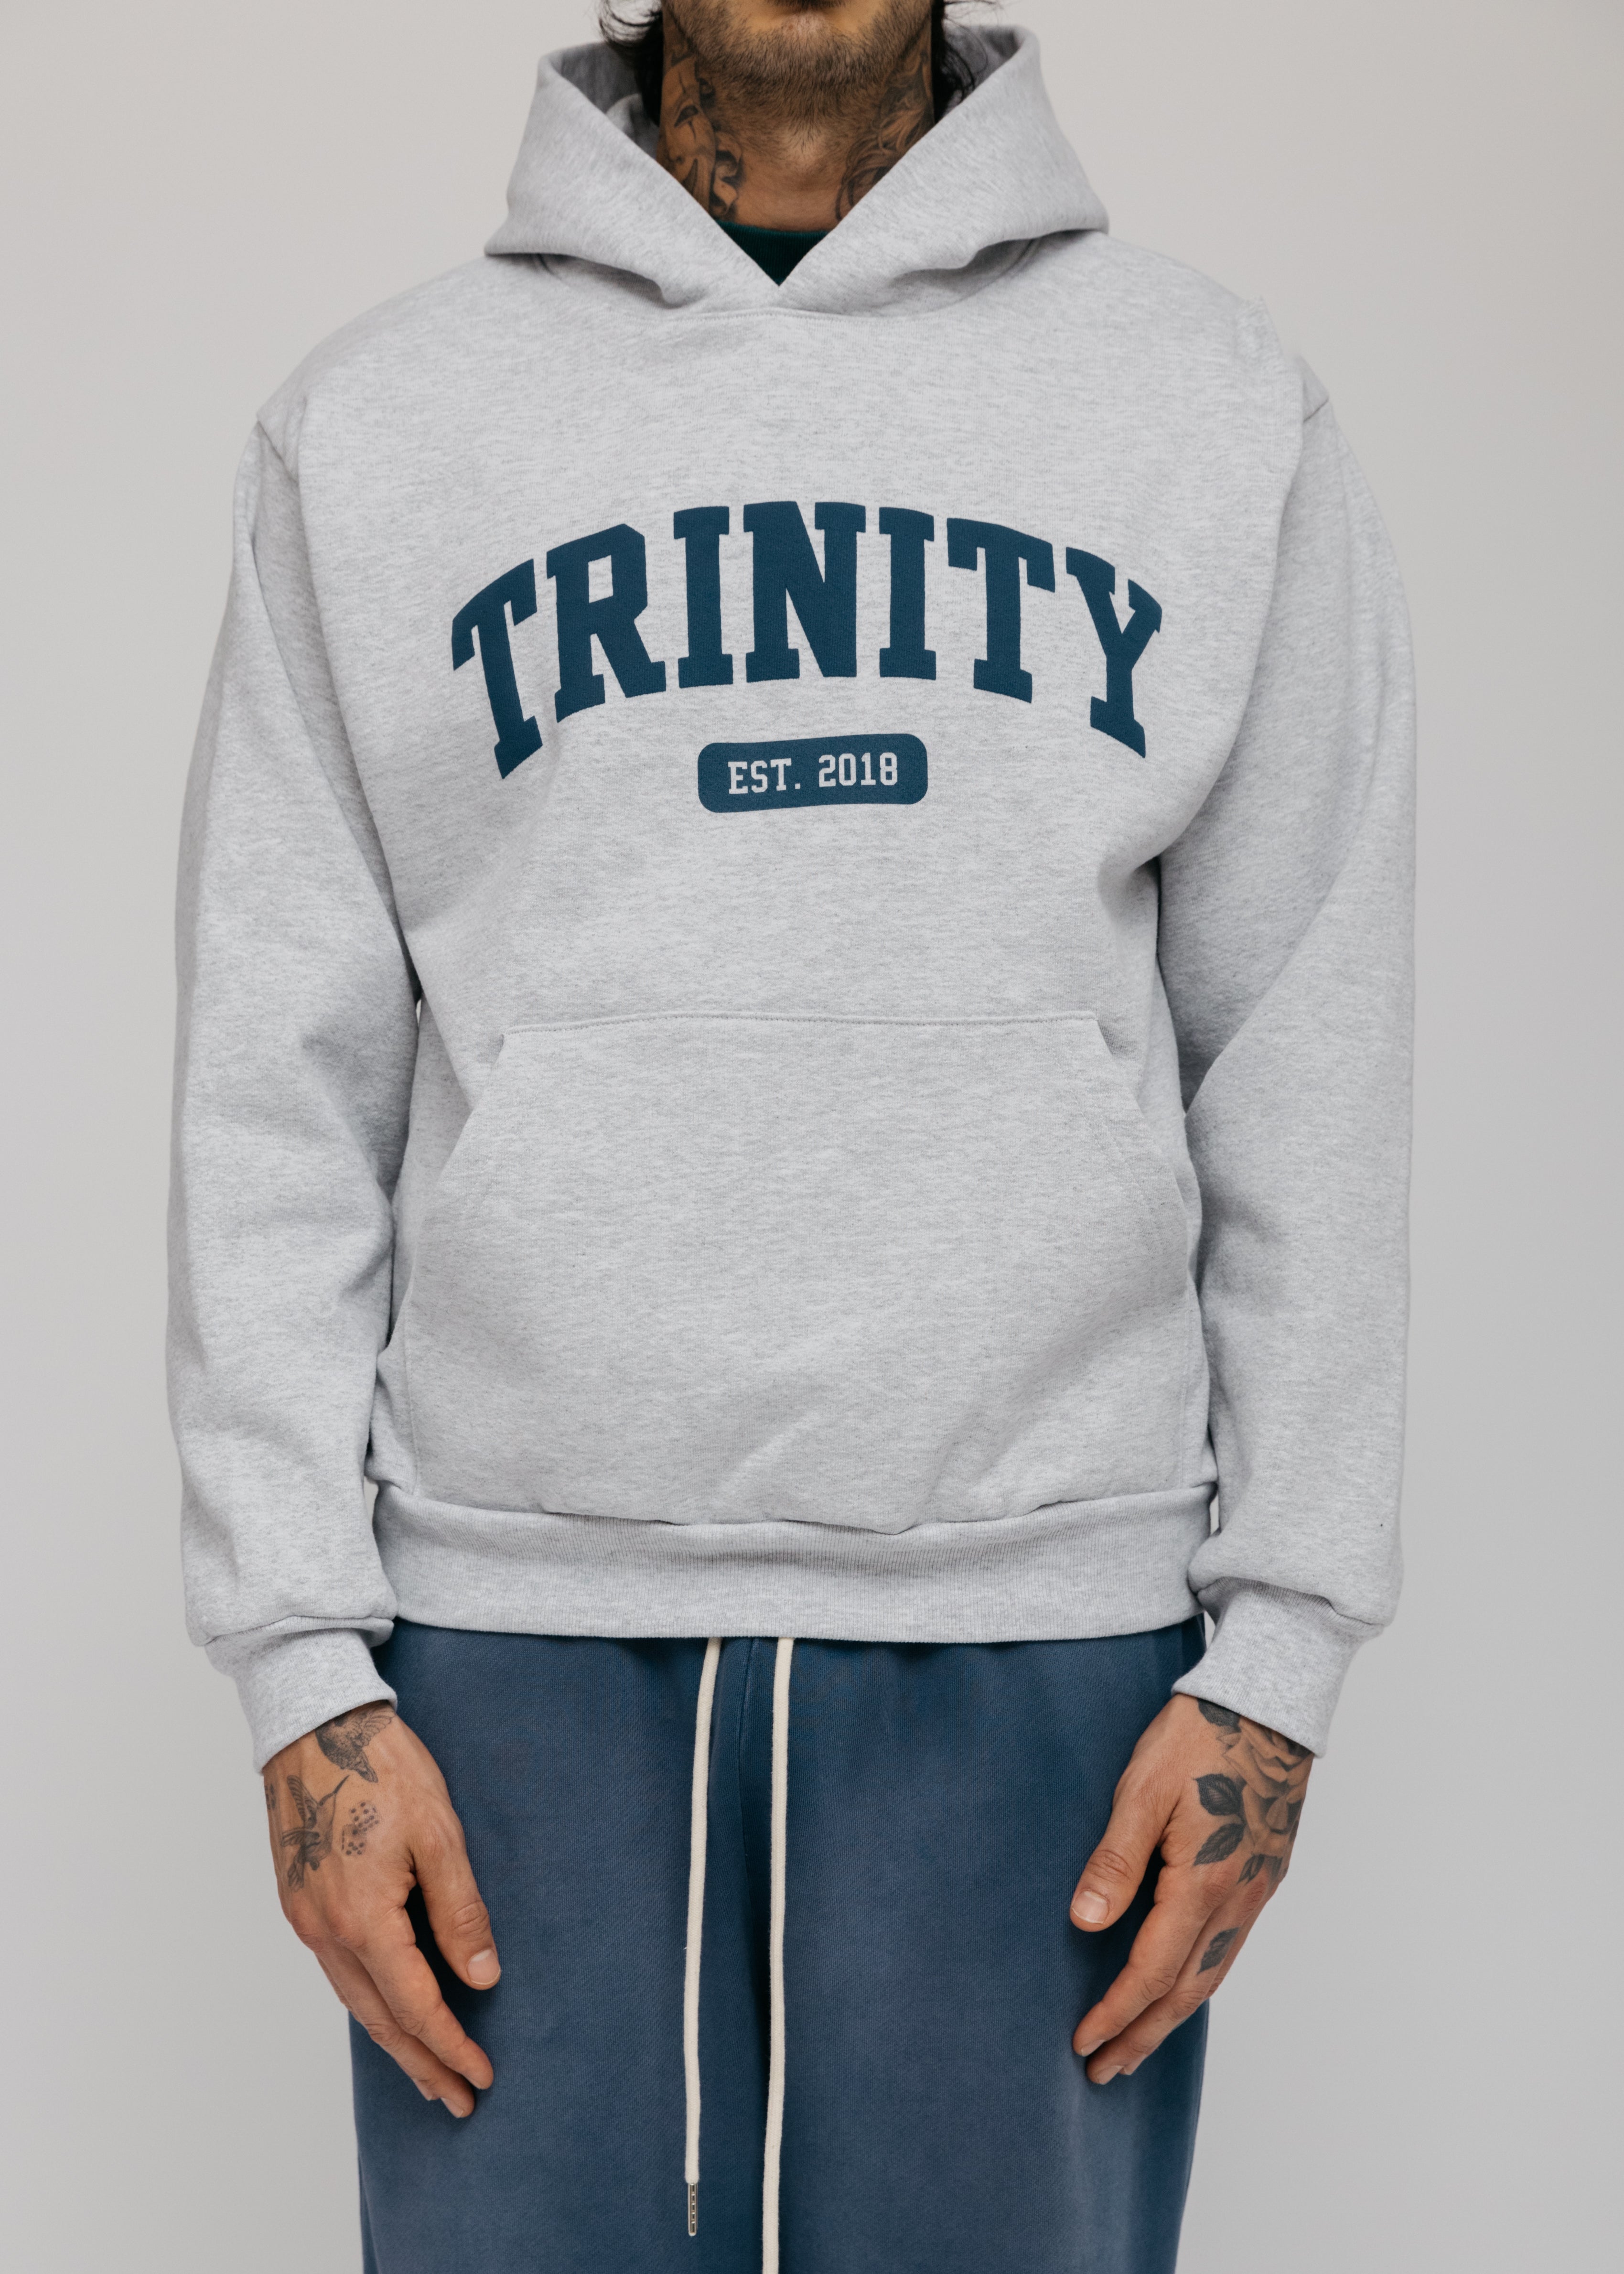 Sweaters & Outerwear - TRINITY